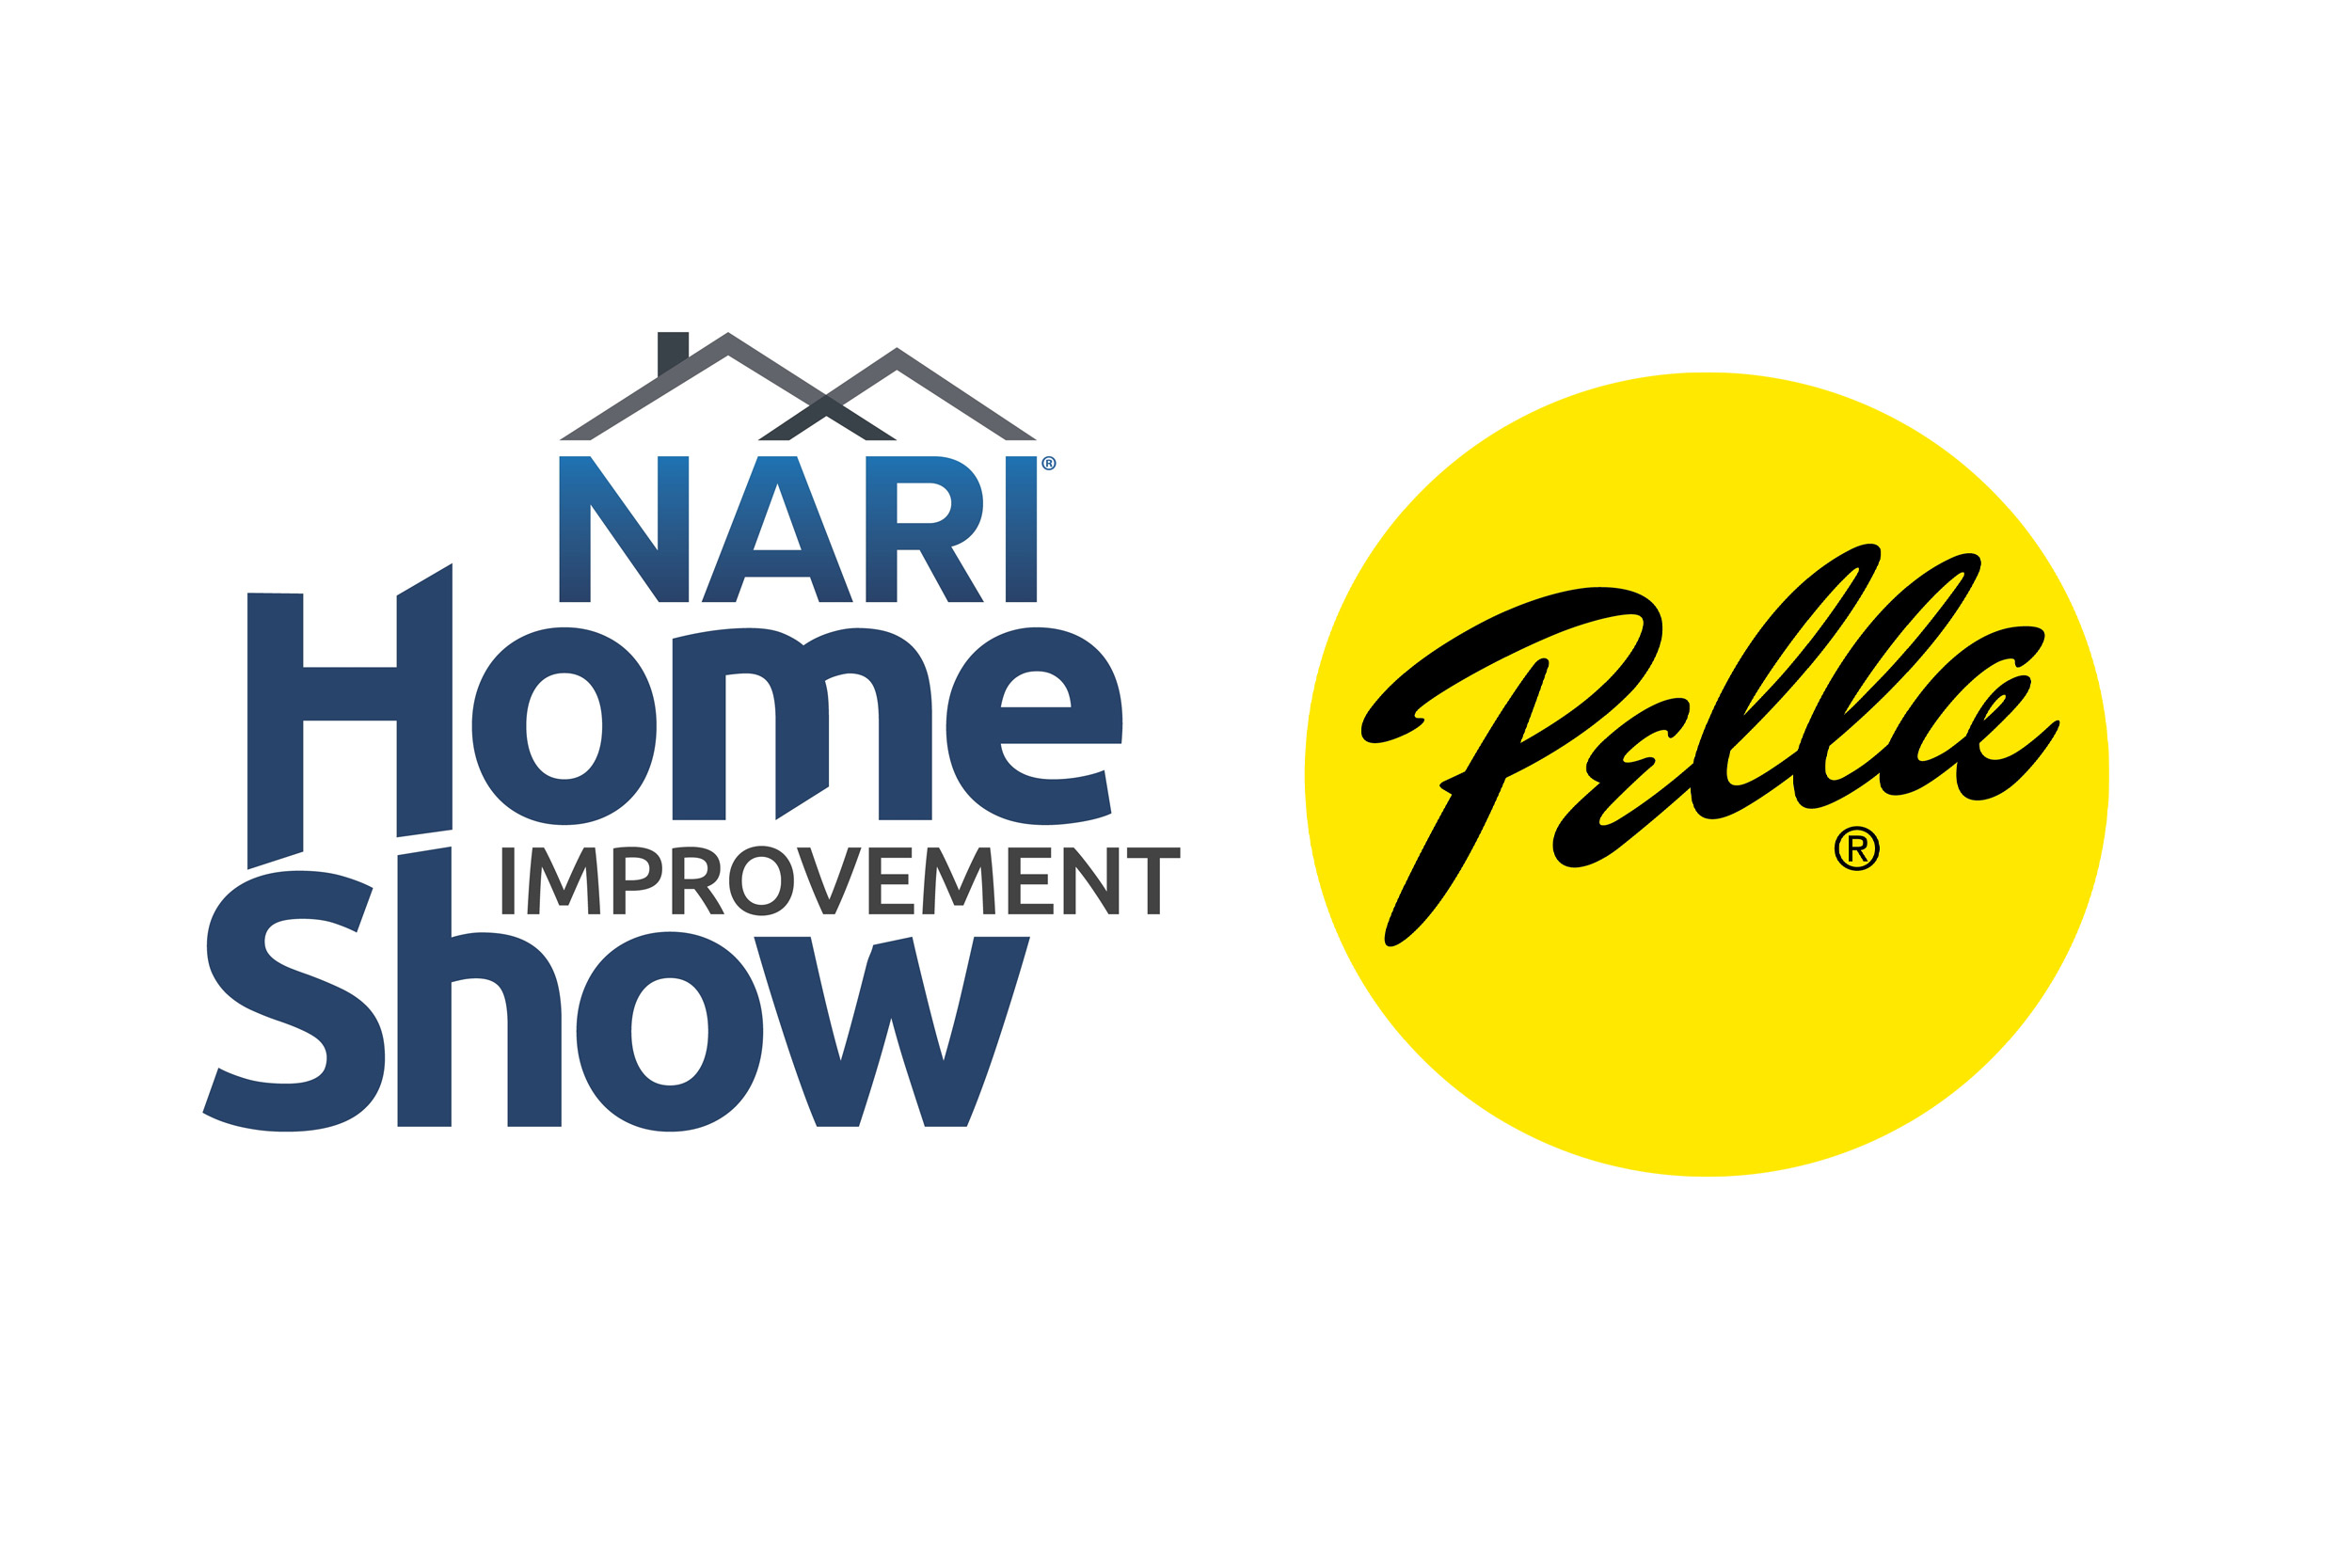 Pella Windows Invests BIG in the upcoming NARI Home Improvement Show